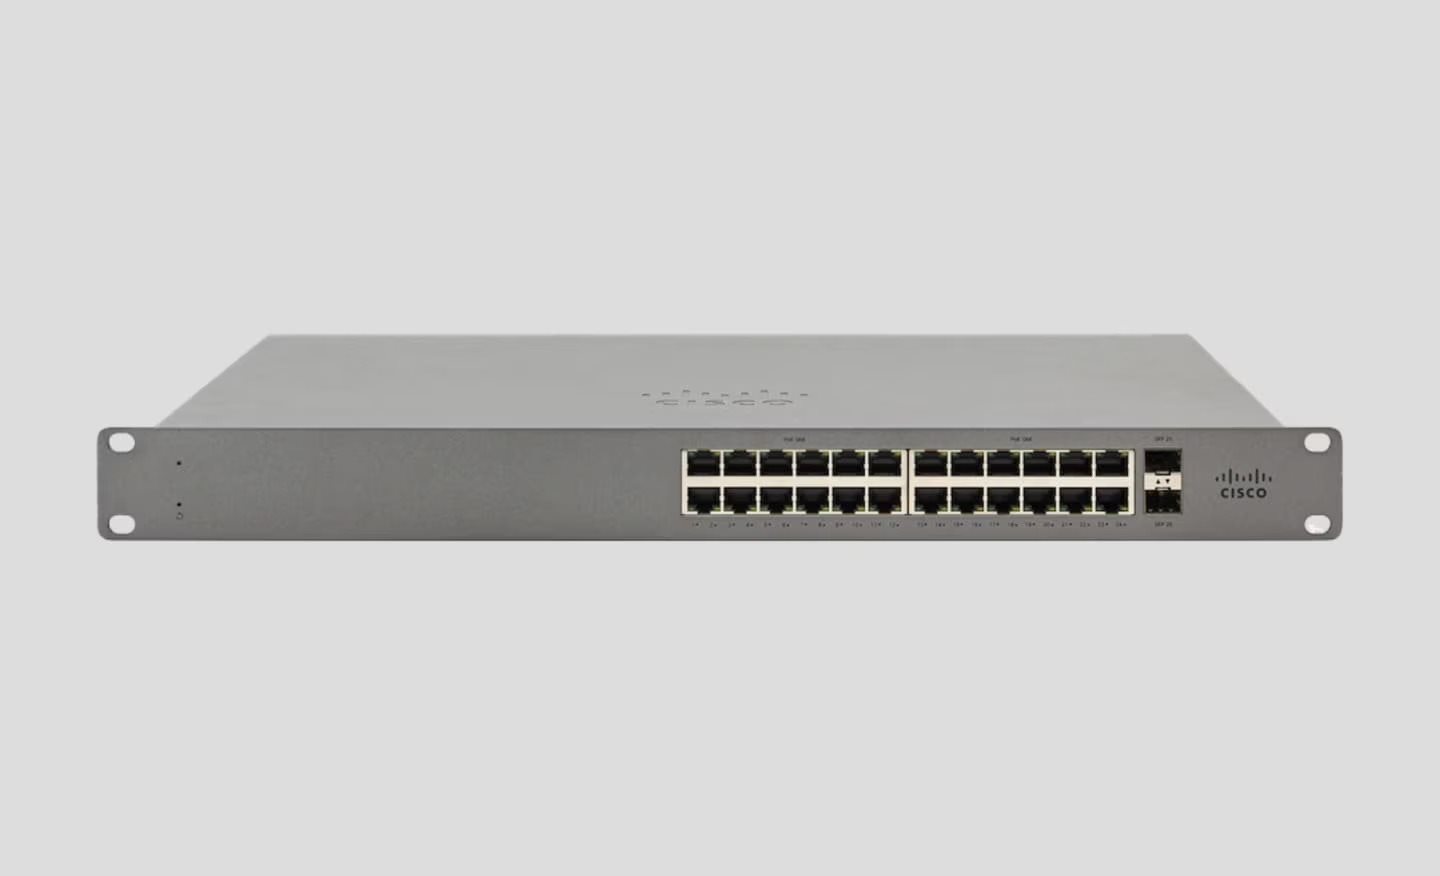 Cisco meraki go - 24 port switch - eu power